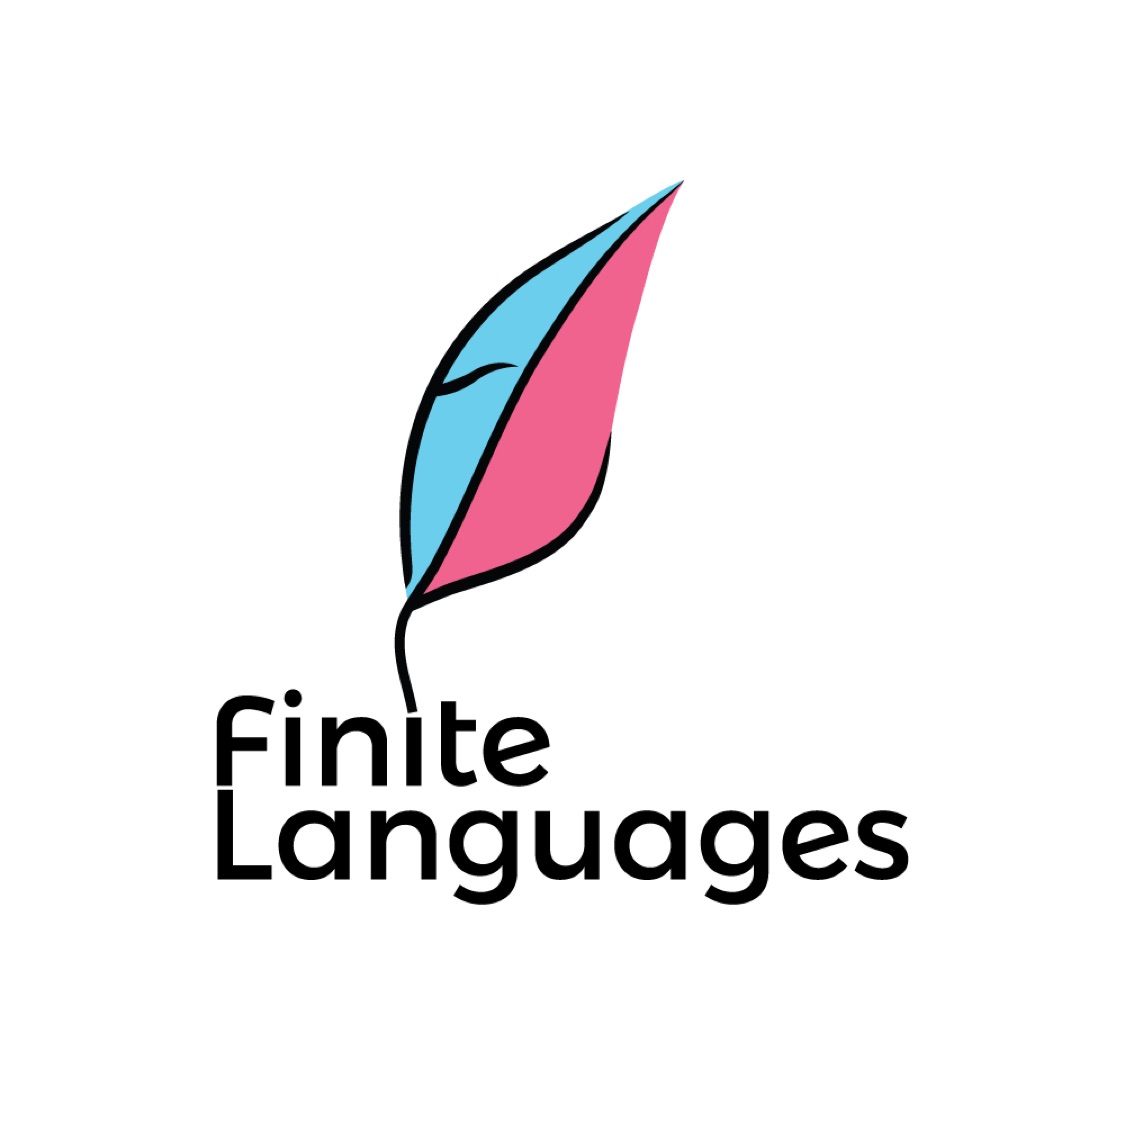 Finite Languages:  Slow English Conversations